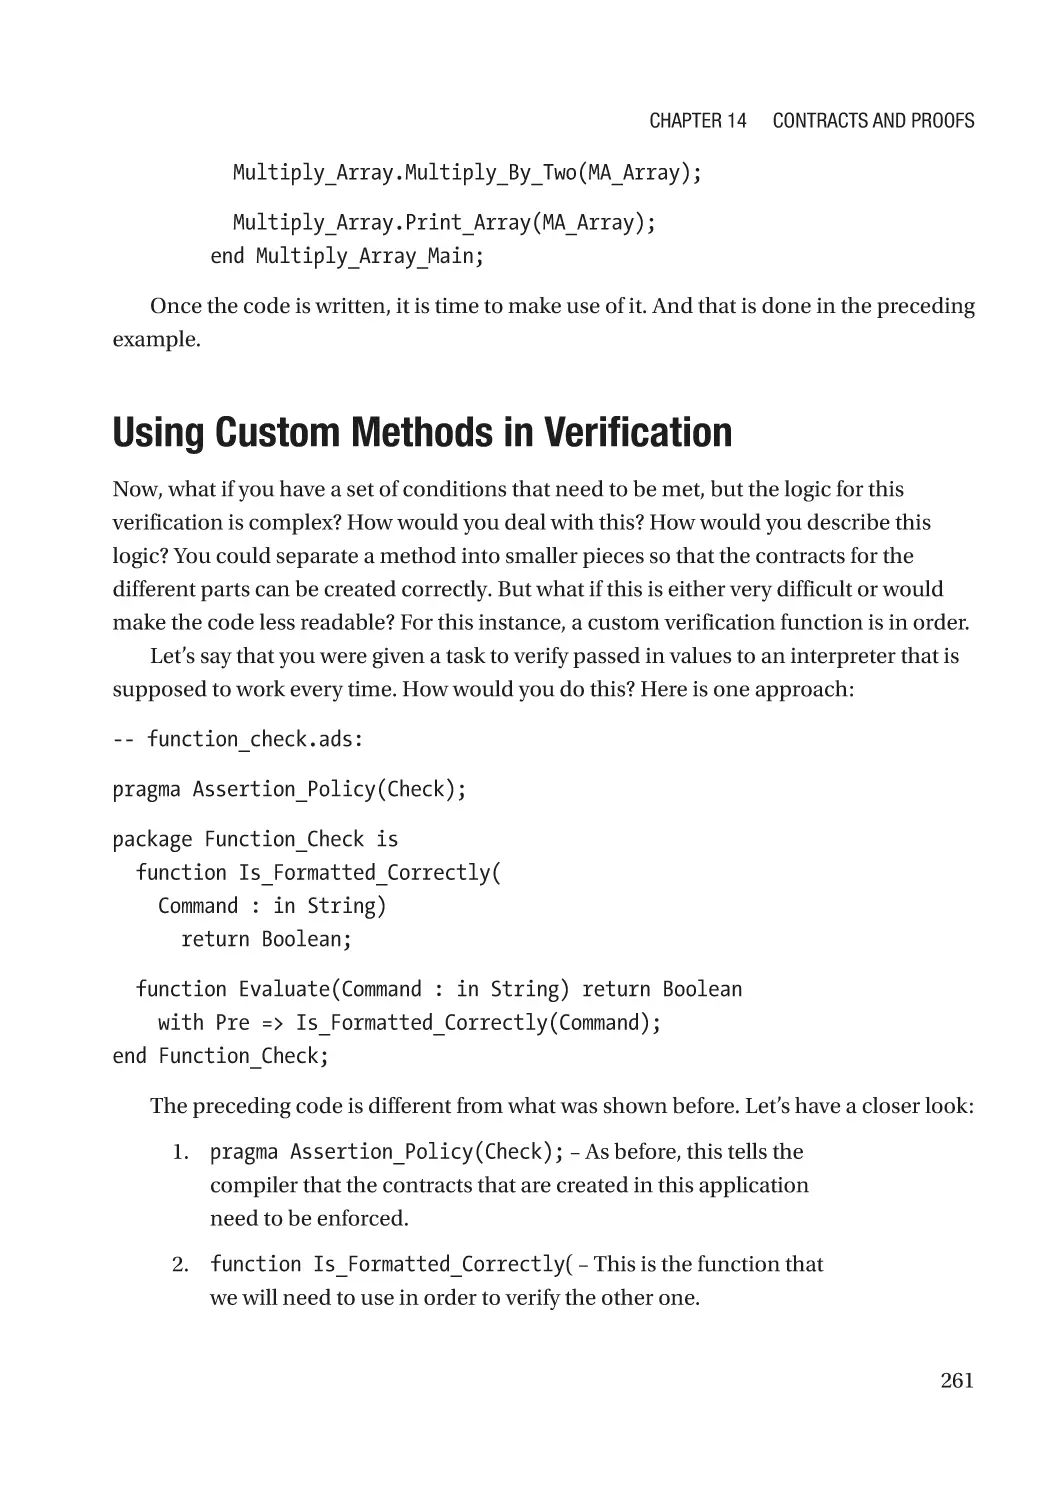 Using Custom Methods in Verification